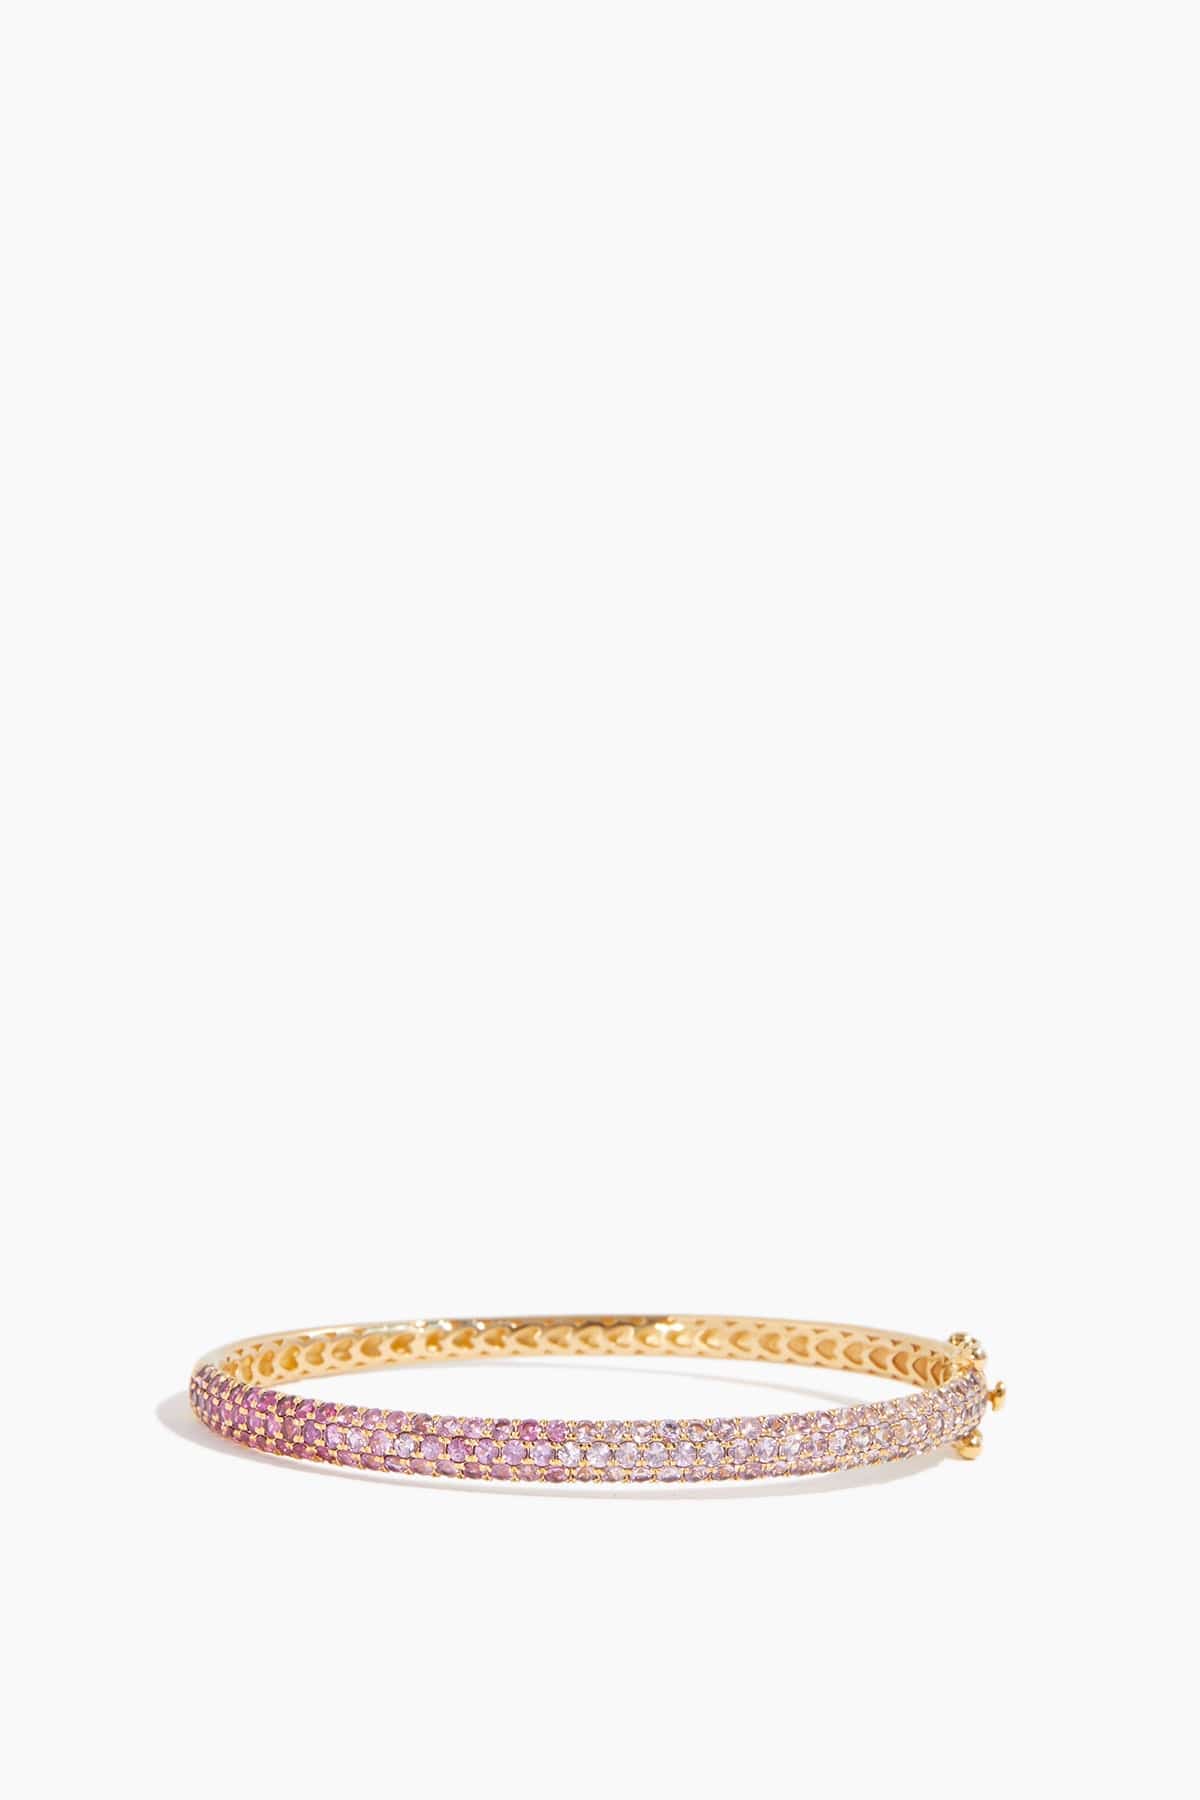 Vintage La Rose Bracelets Pink Sapphire Ombre Bangle in 14k Yellow Gold